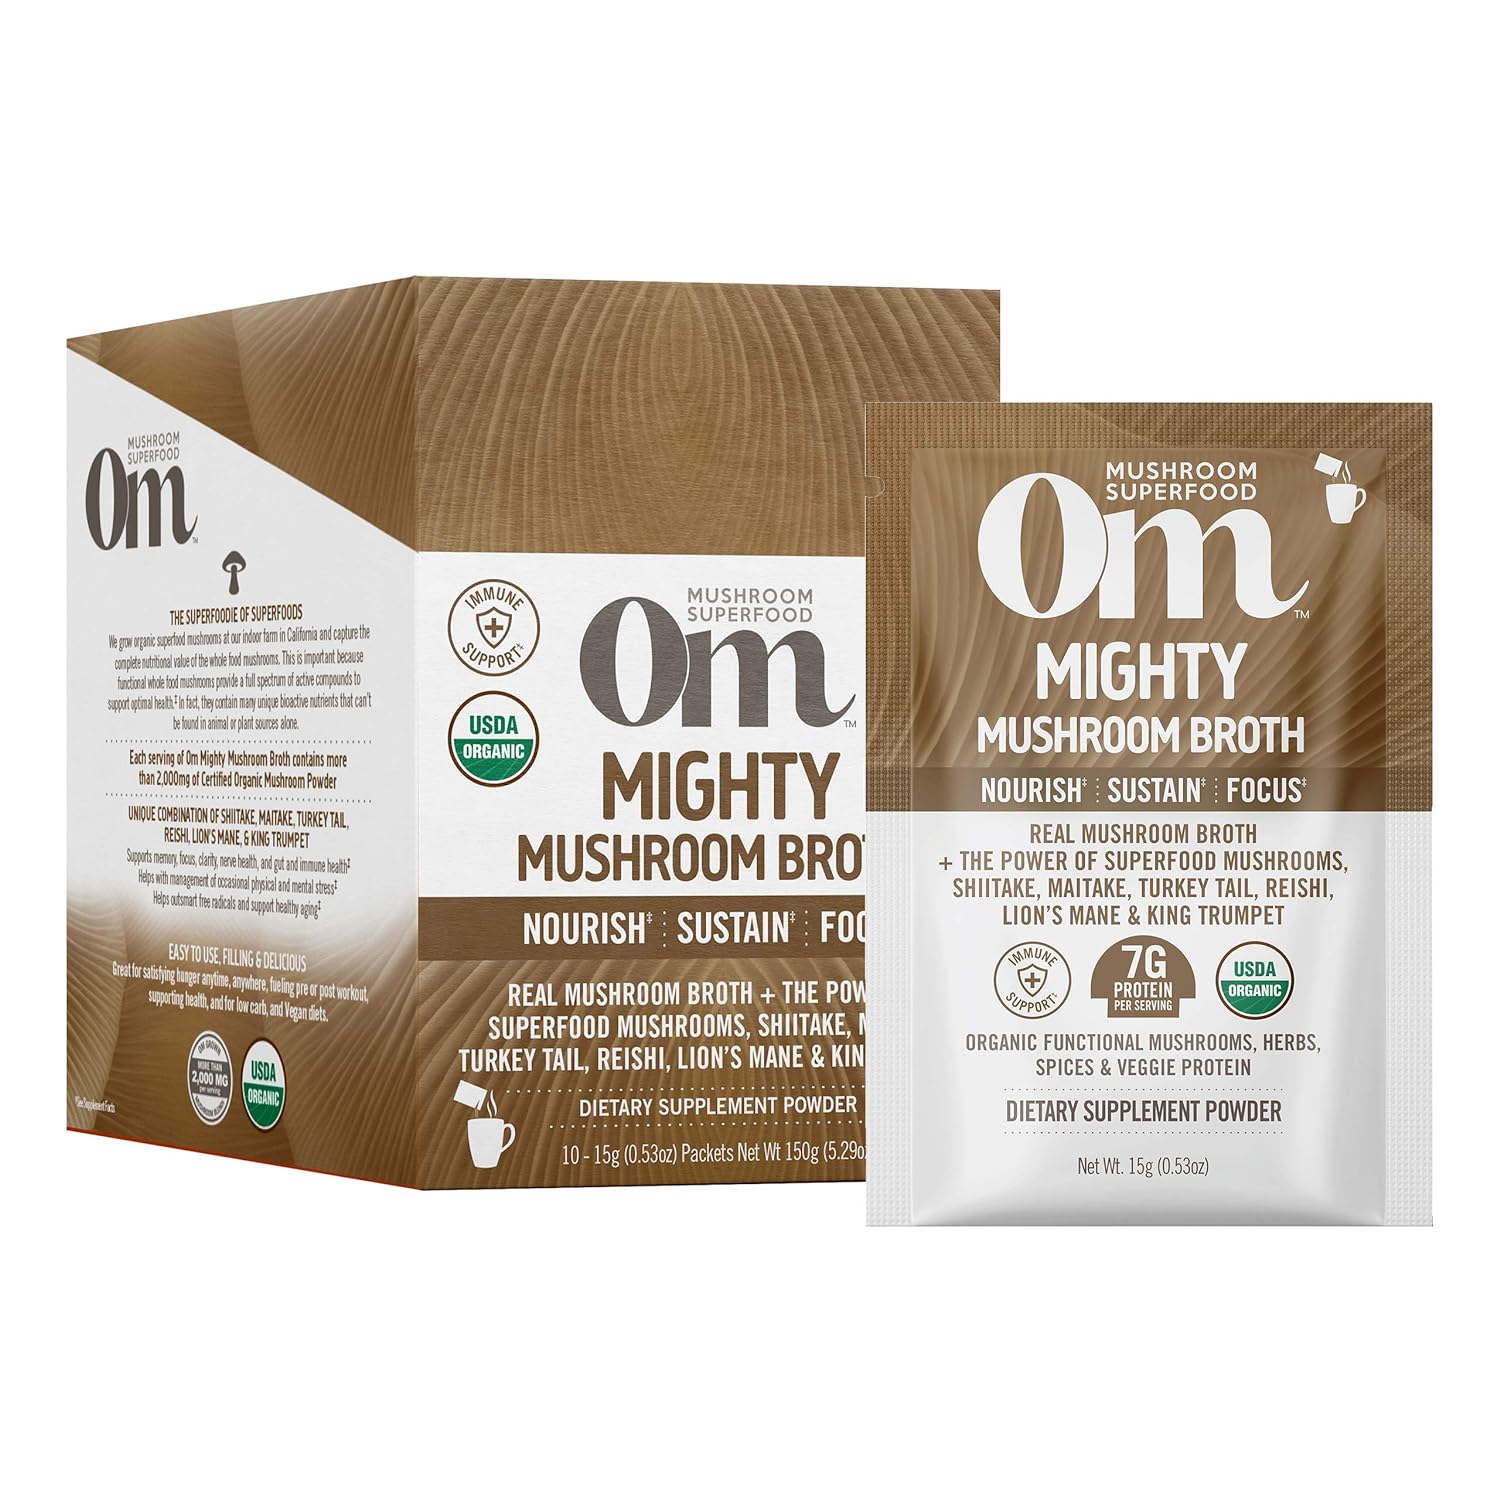 Om Mushroom Superfood Mighty Mushroom Broth 7g Protein Powder, Single Serve, 10 Count, Savory Organic Mushroom Blend, Supports Immune and Gut Health